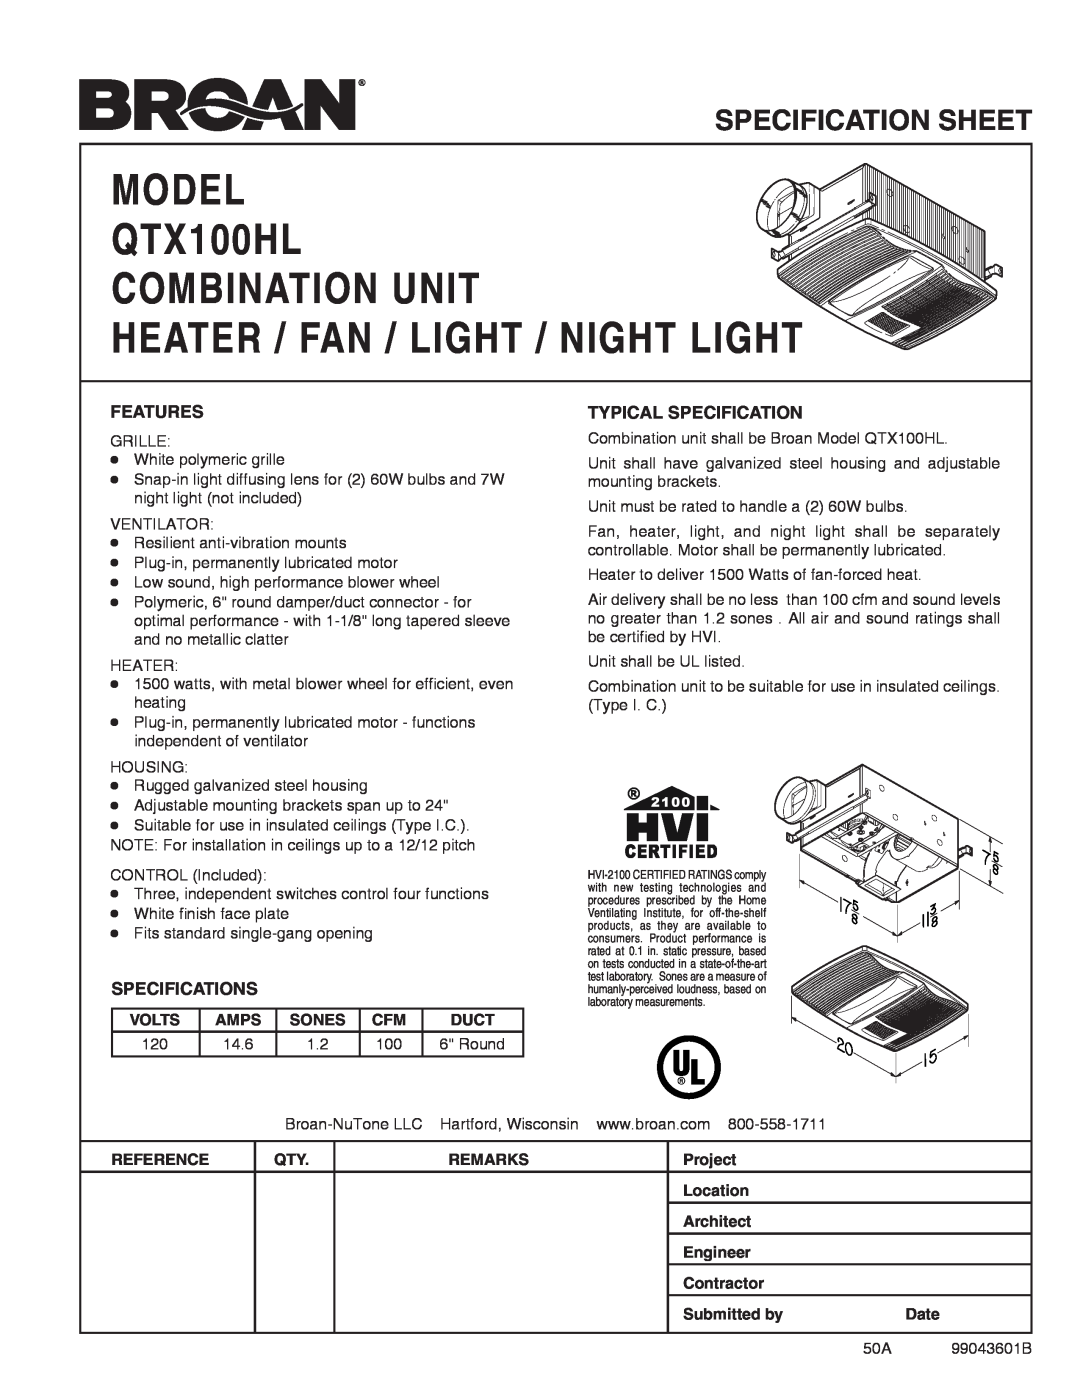 Broan specifications Combination Unit Heater / Fan / Light / Night Light, MODEL QTX100HL, Specification Sheet, Features 